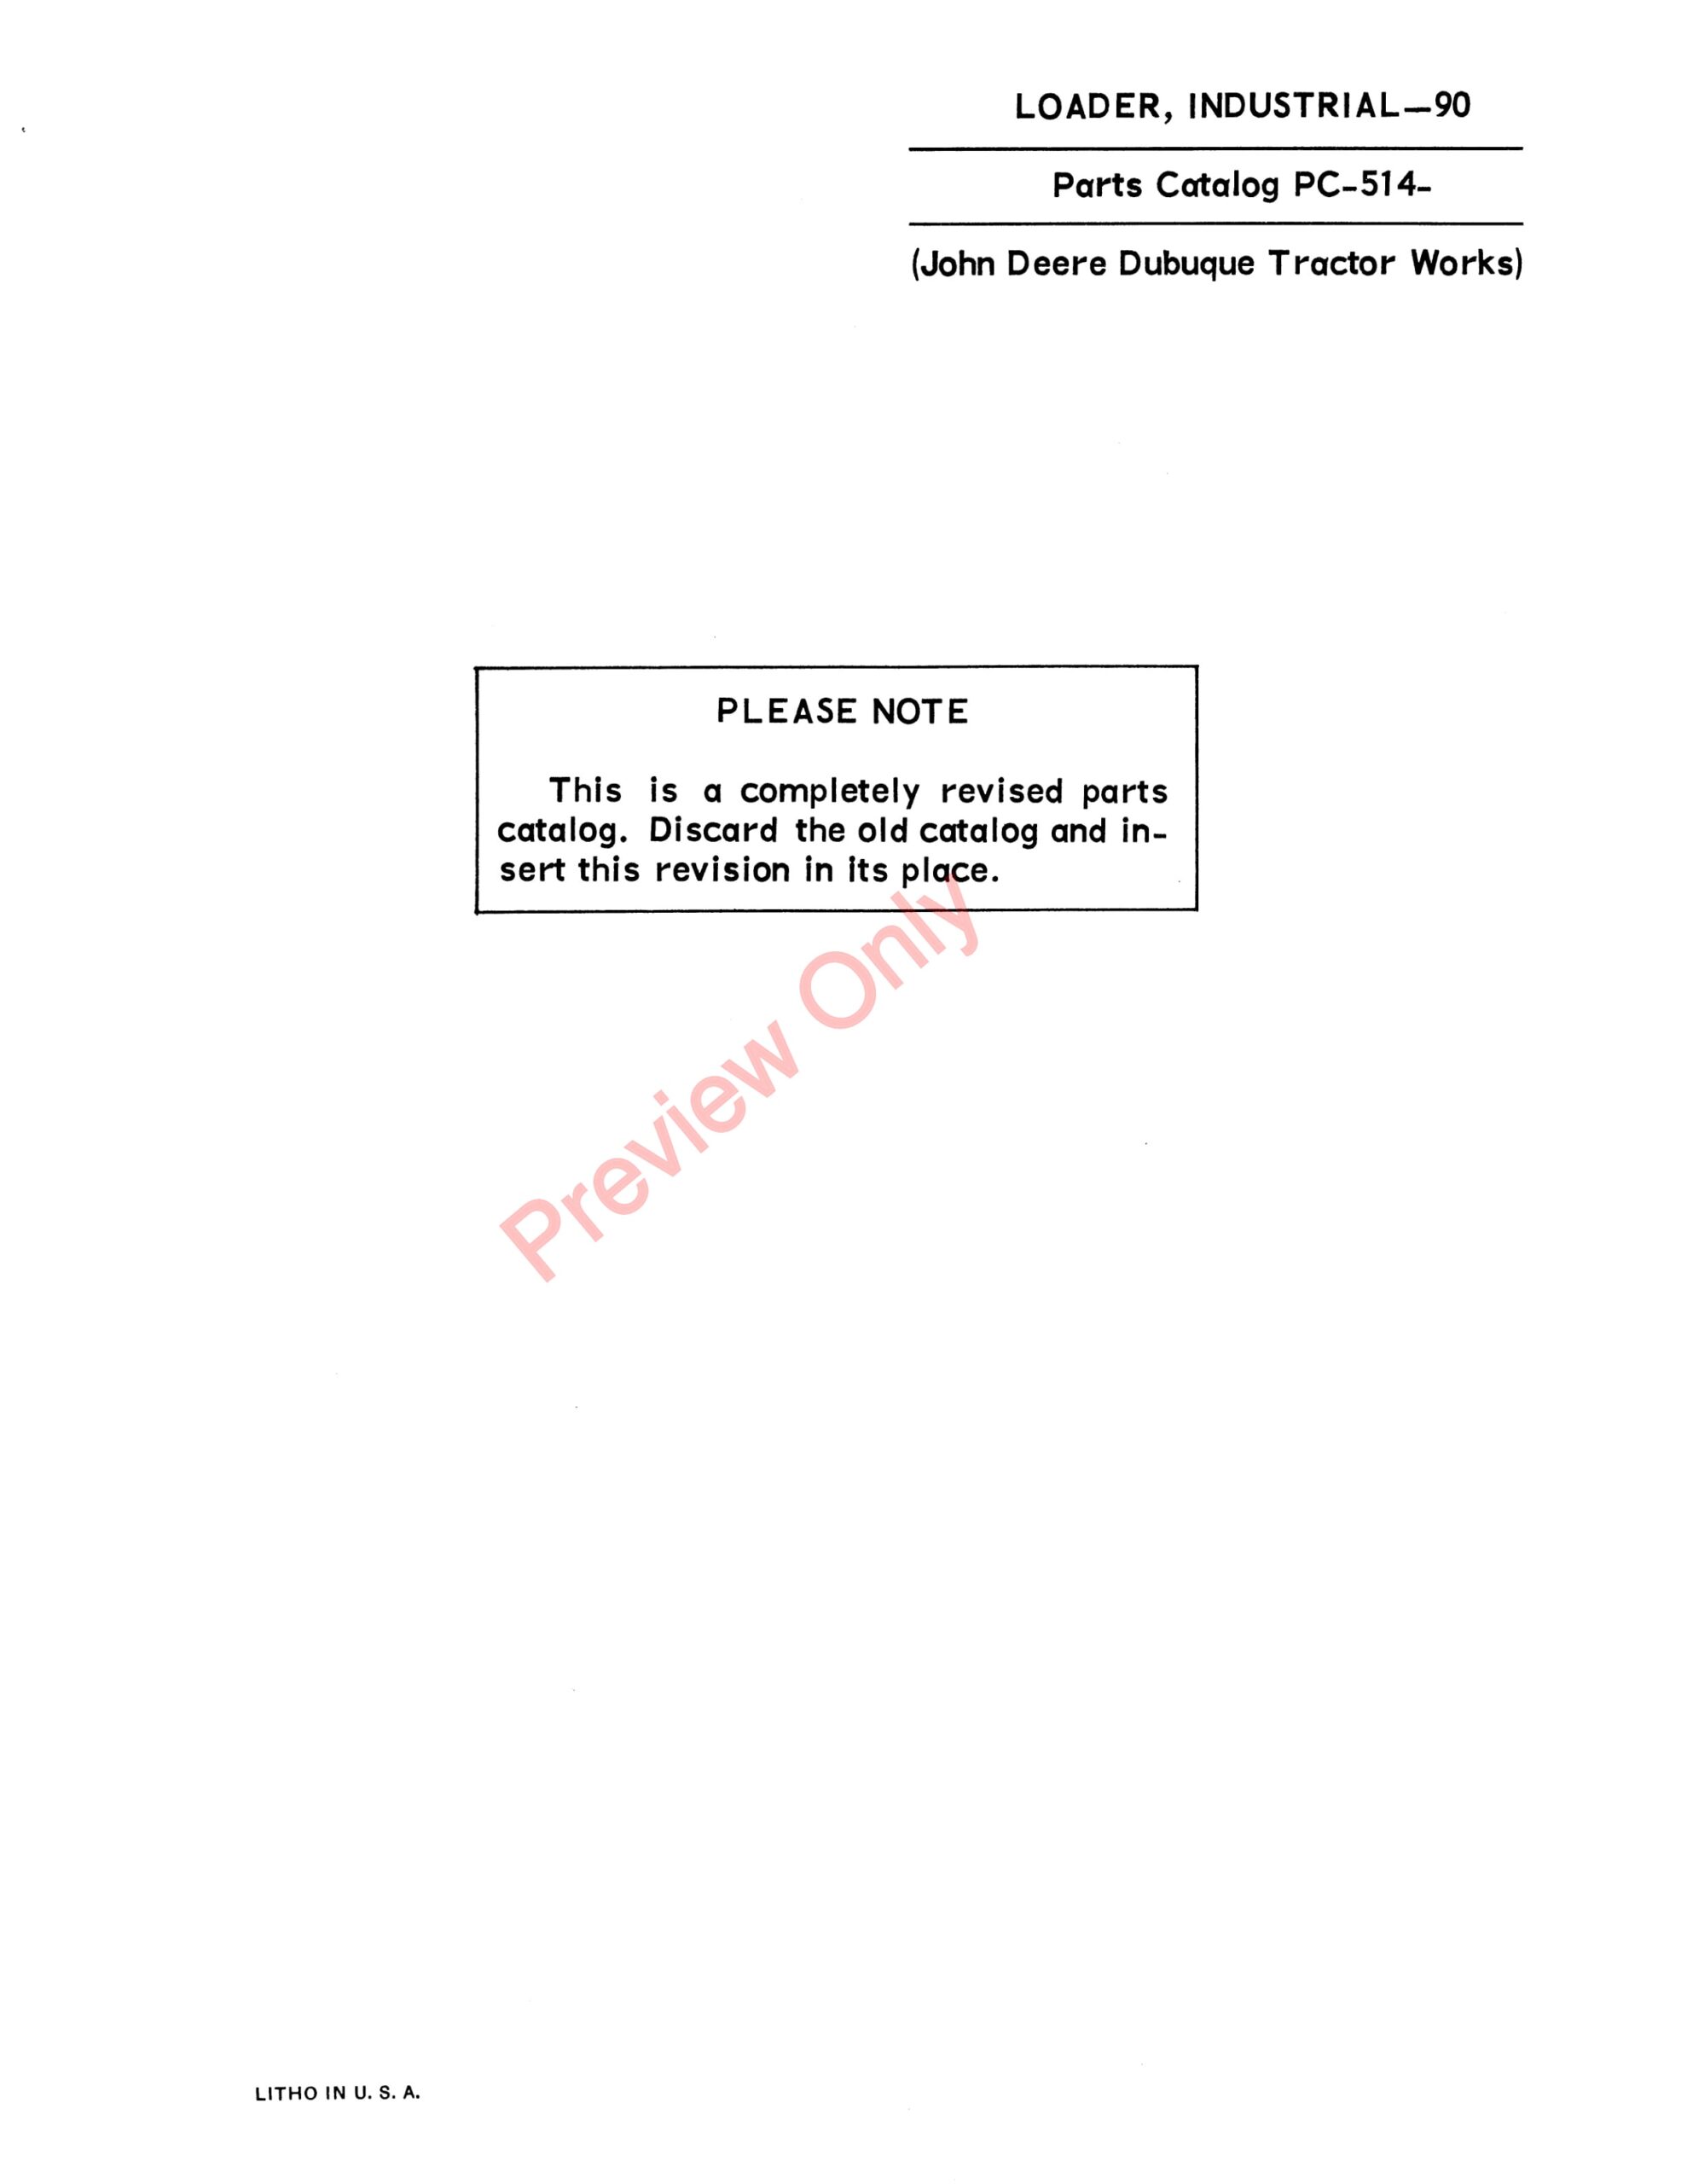 John Deere Industrial Loader – 90 Parts Catalog PC514 01OCT66-1